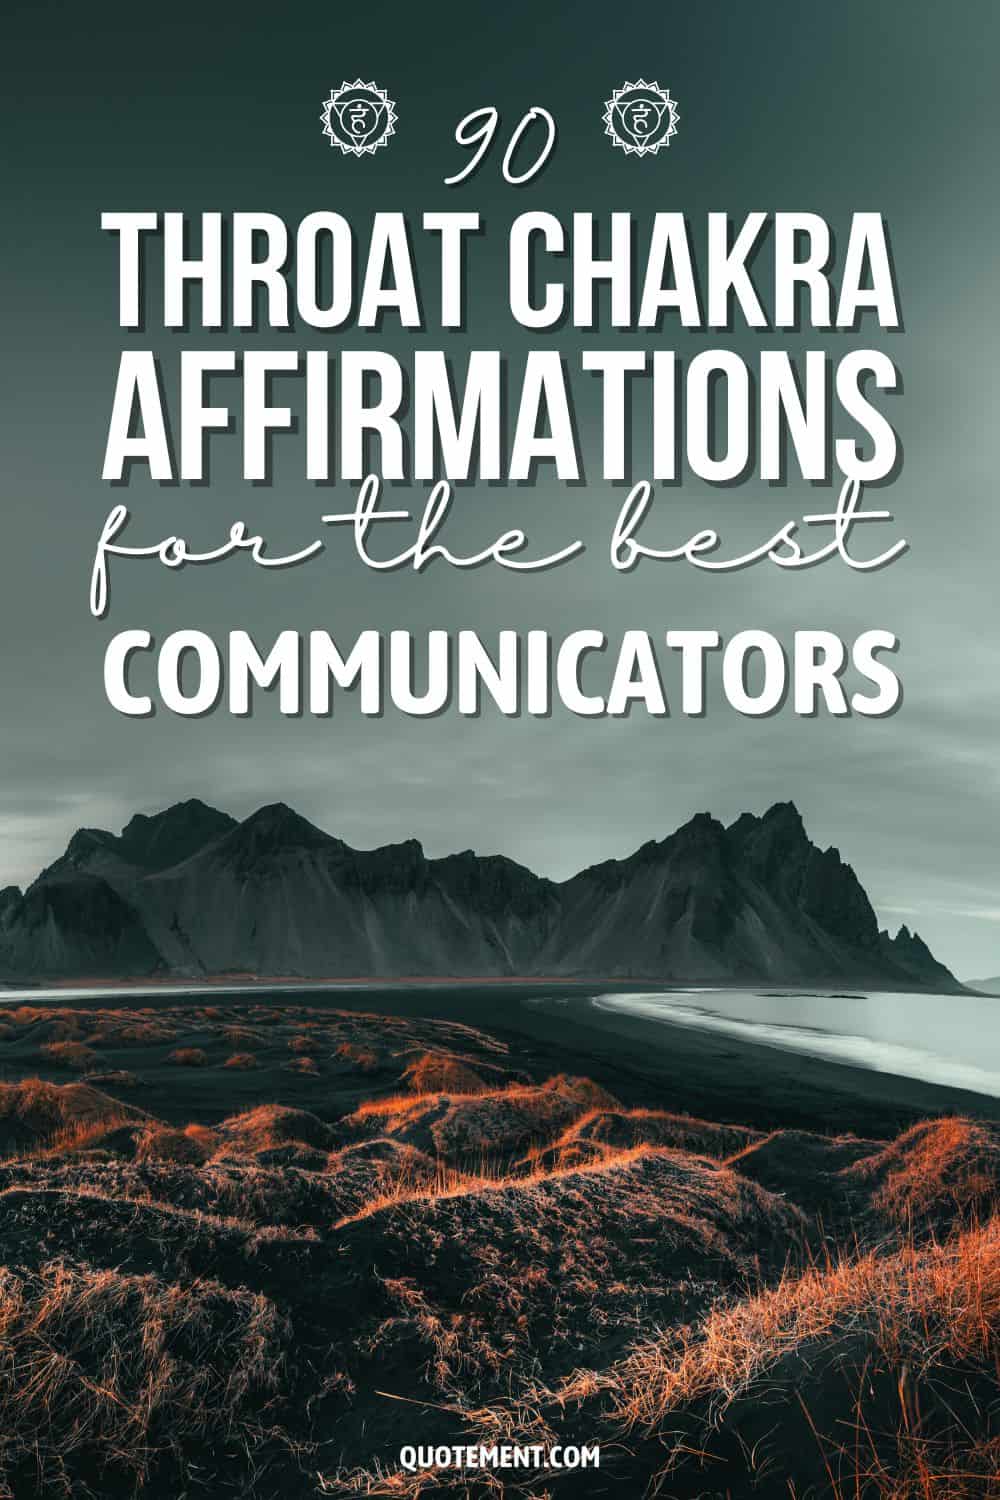 90 Throat Chakra Affirmations For The Best Communicators
